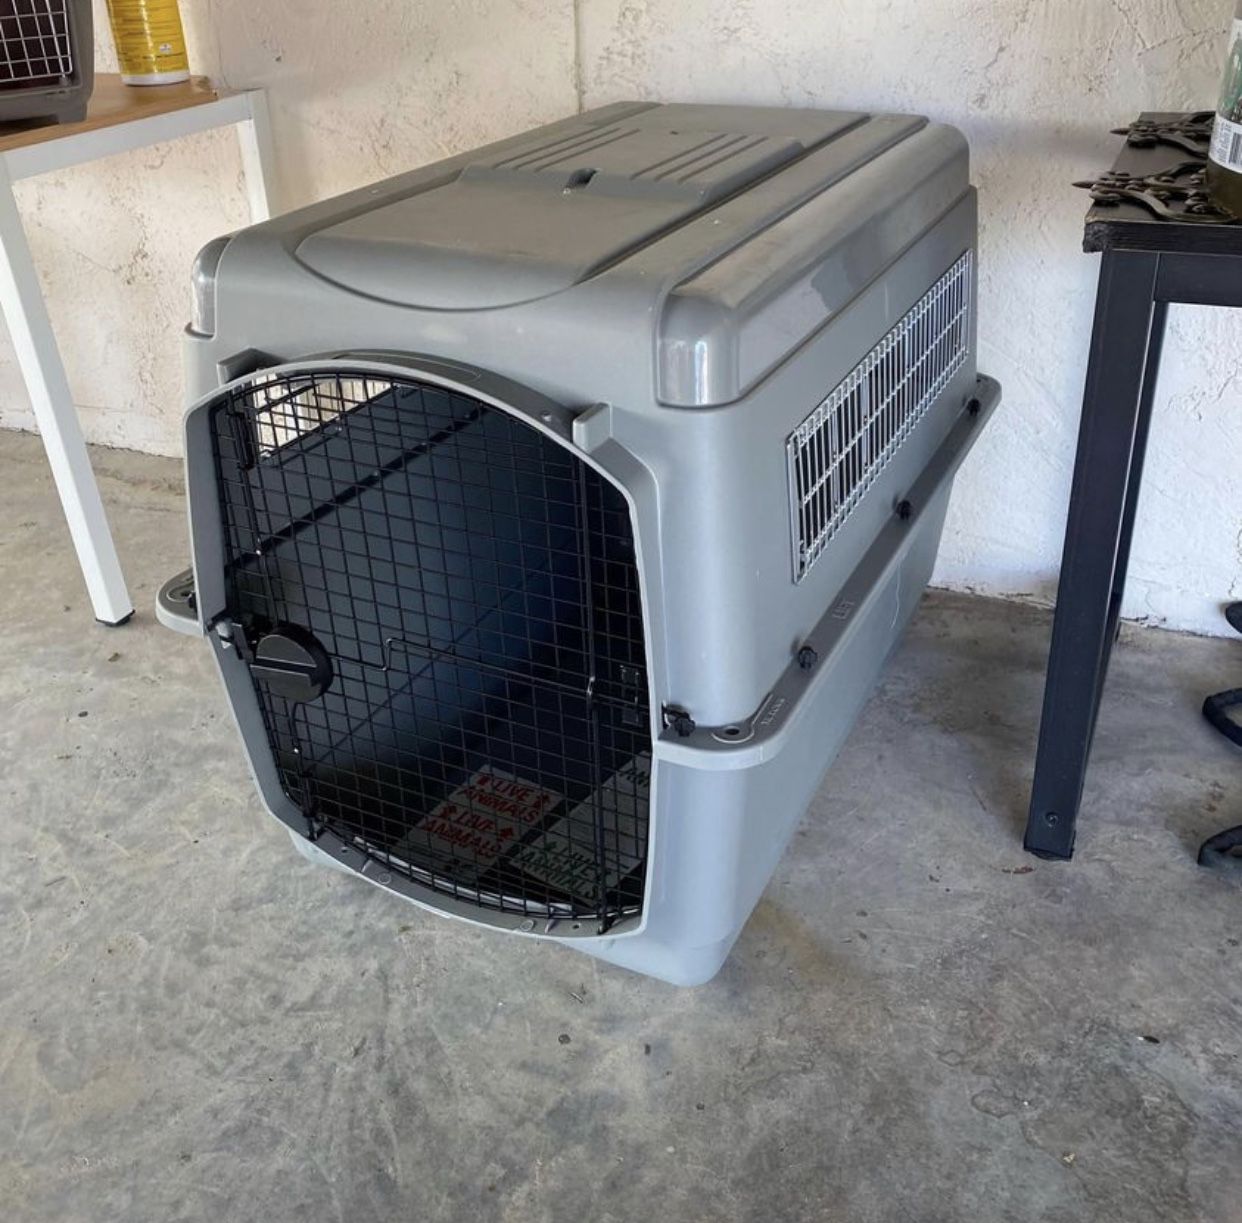 Petmate Sky Kennel Pet Carrier - 40 Inch for Sale in Las Vegas, NV - OfferUp